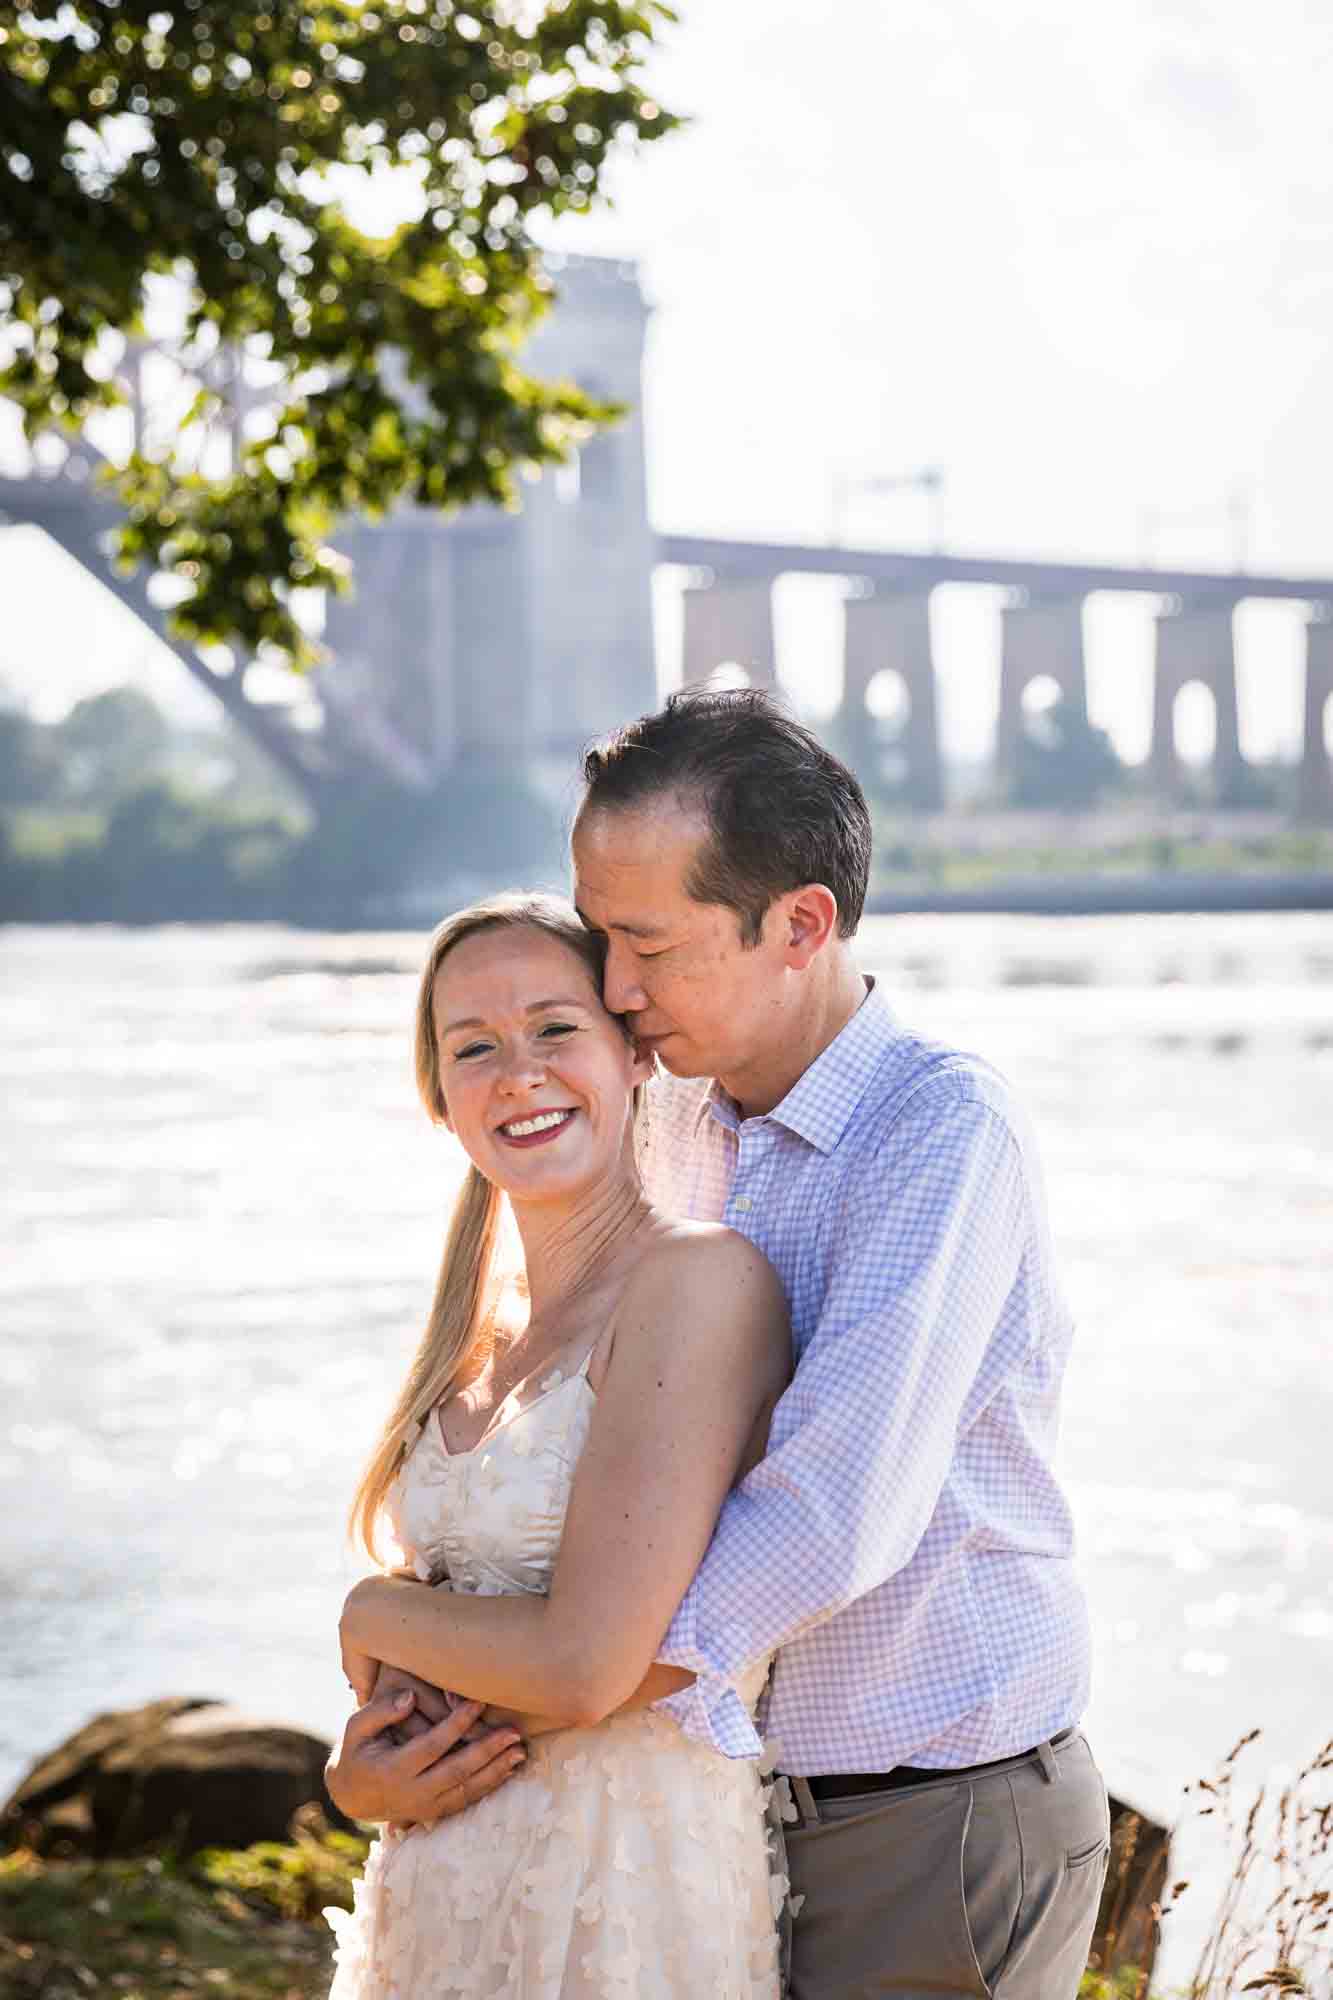 Astoria Park engagement photos of a man kissing woman on cheek along waterfront